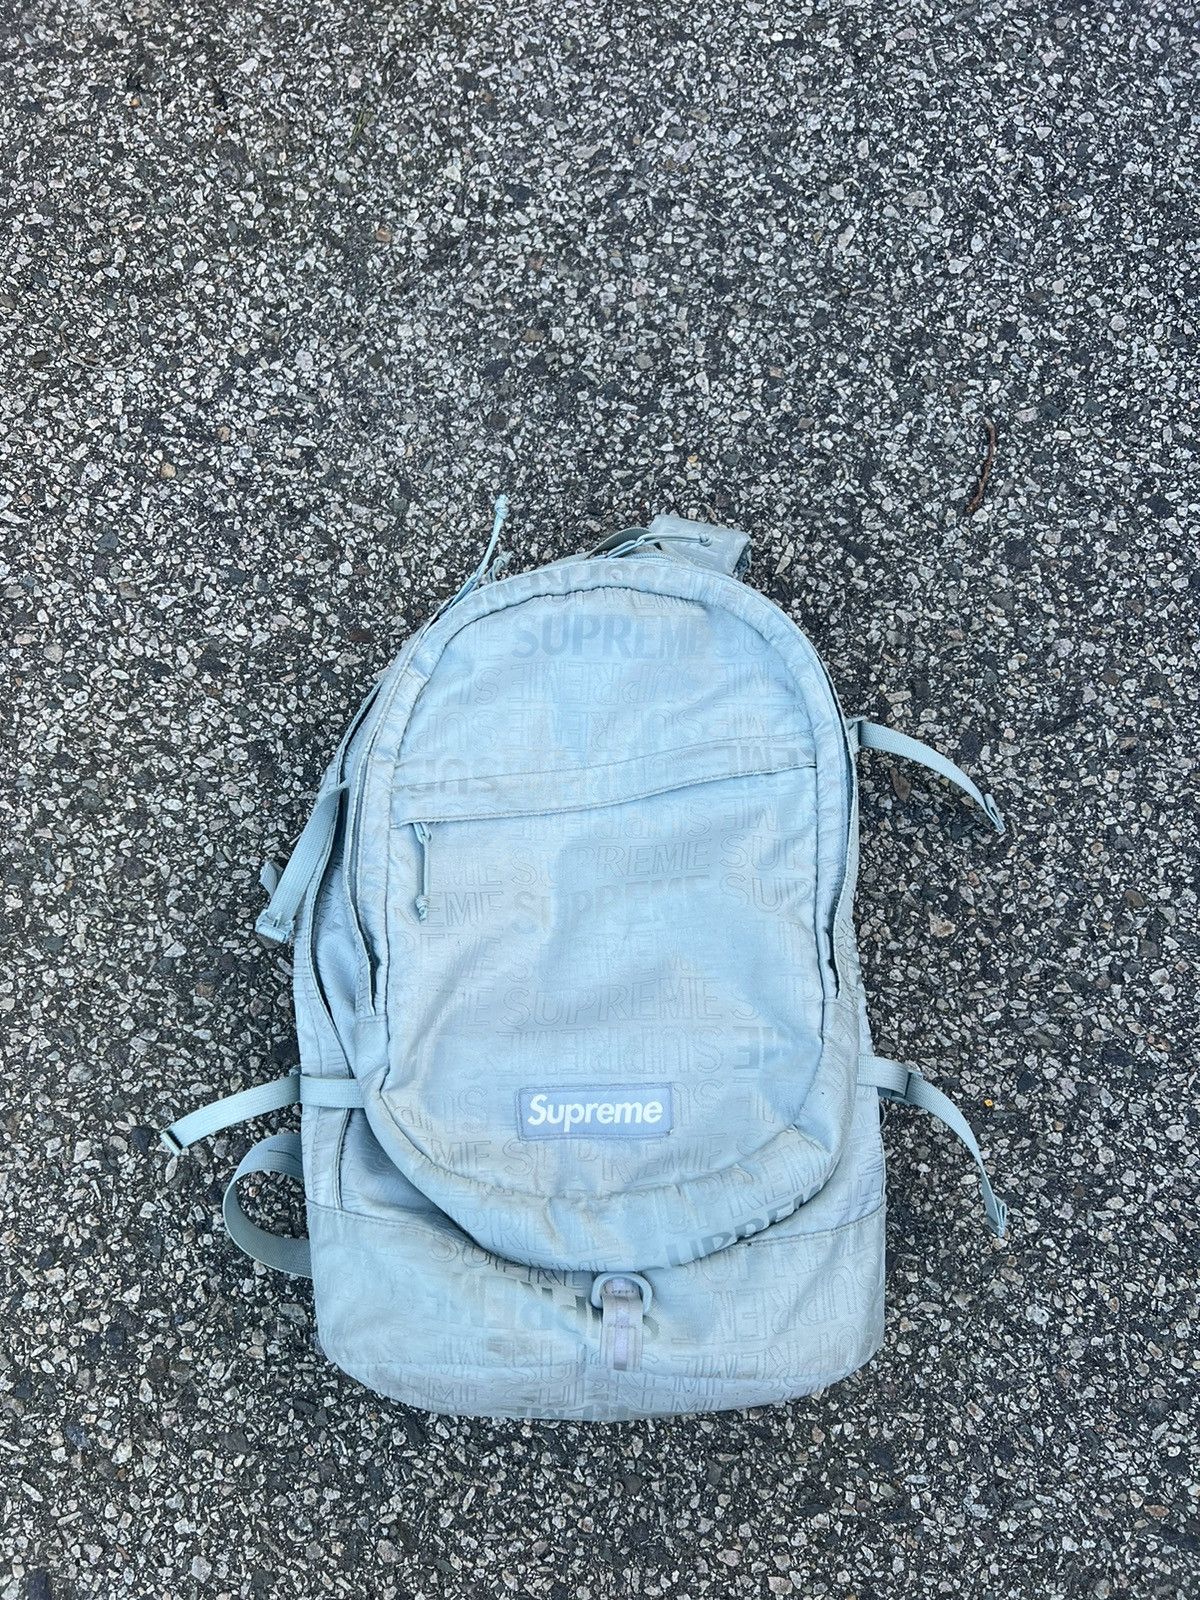 Supreme Supreme Ice Blue Backpack | Grailed